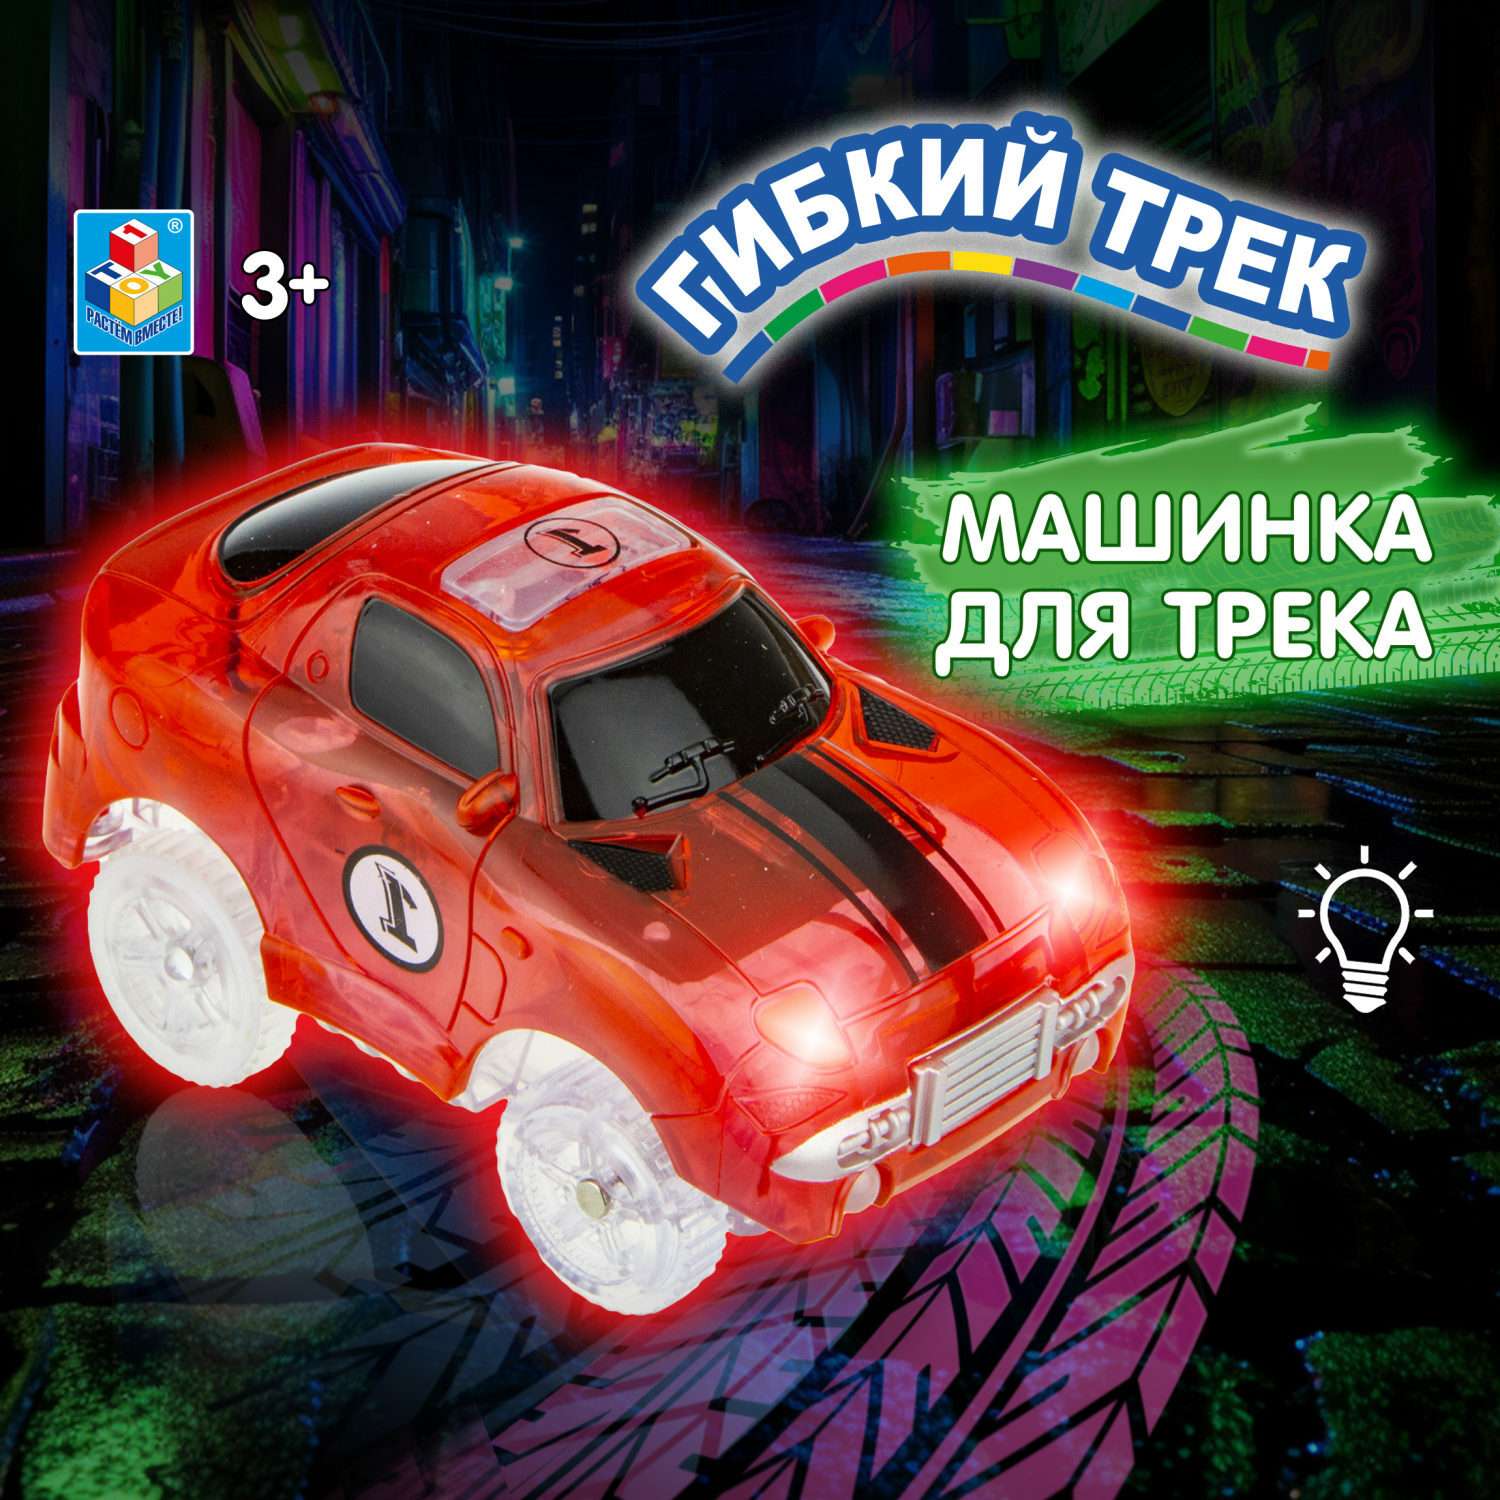 Машинка Гибкий трек красный спорткар Т16669КРАСН - фото 1